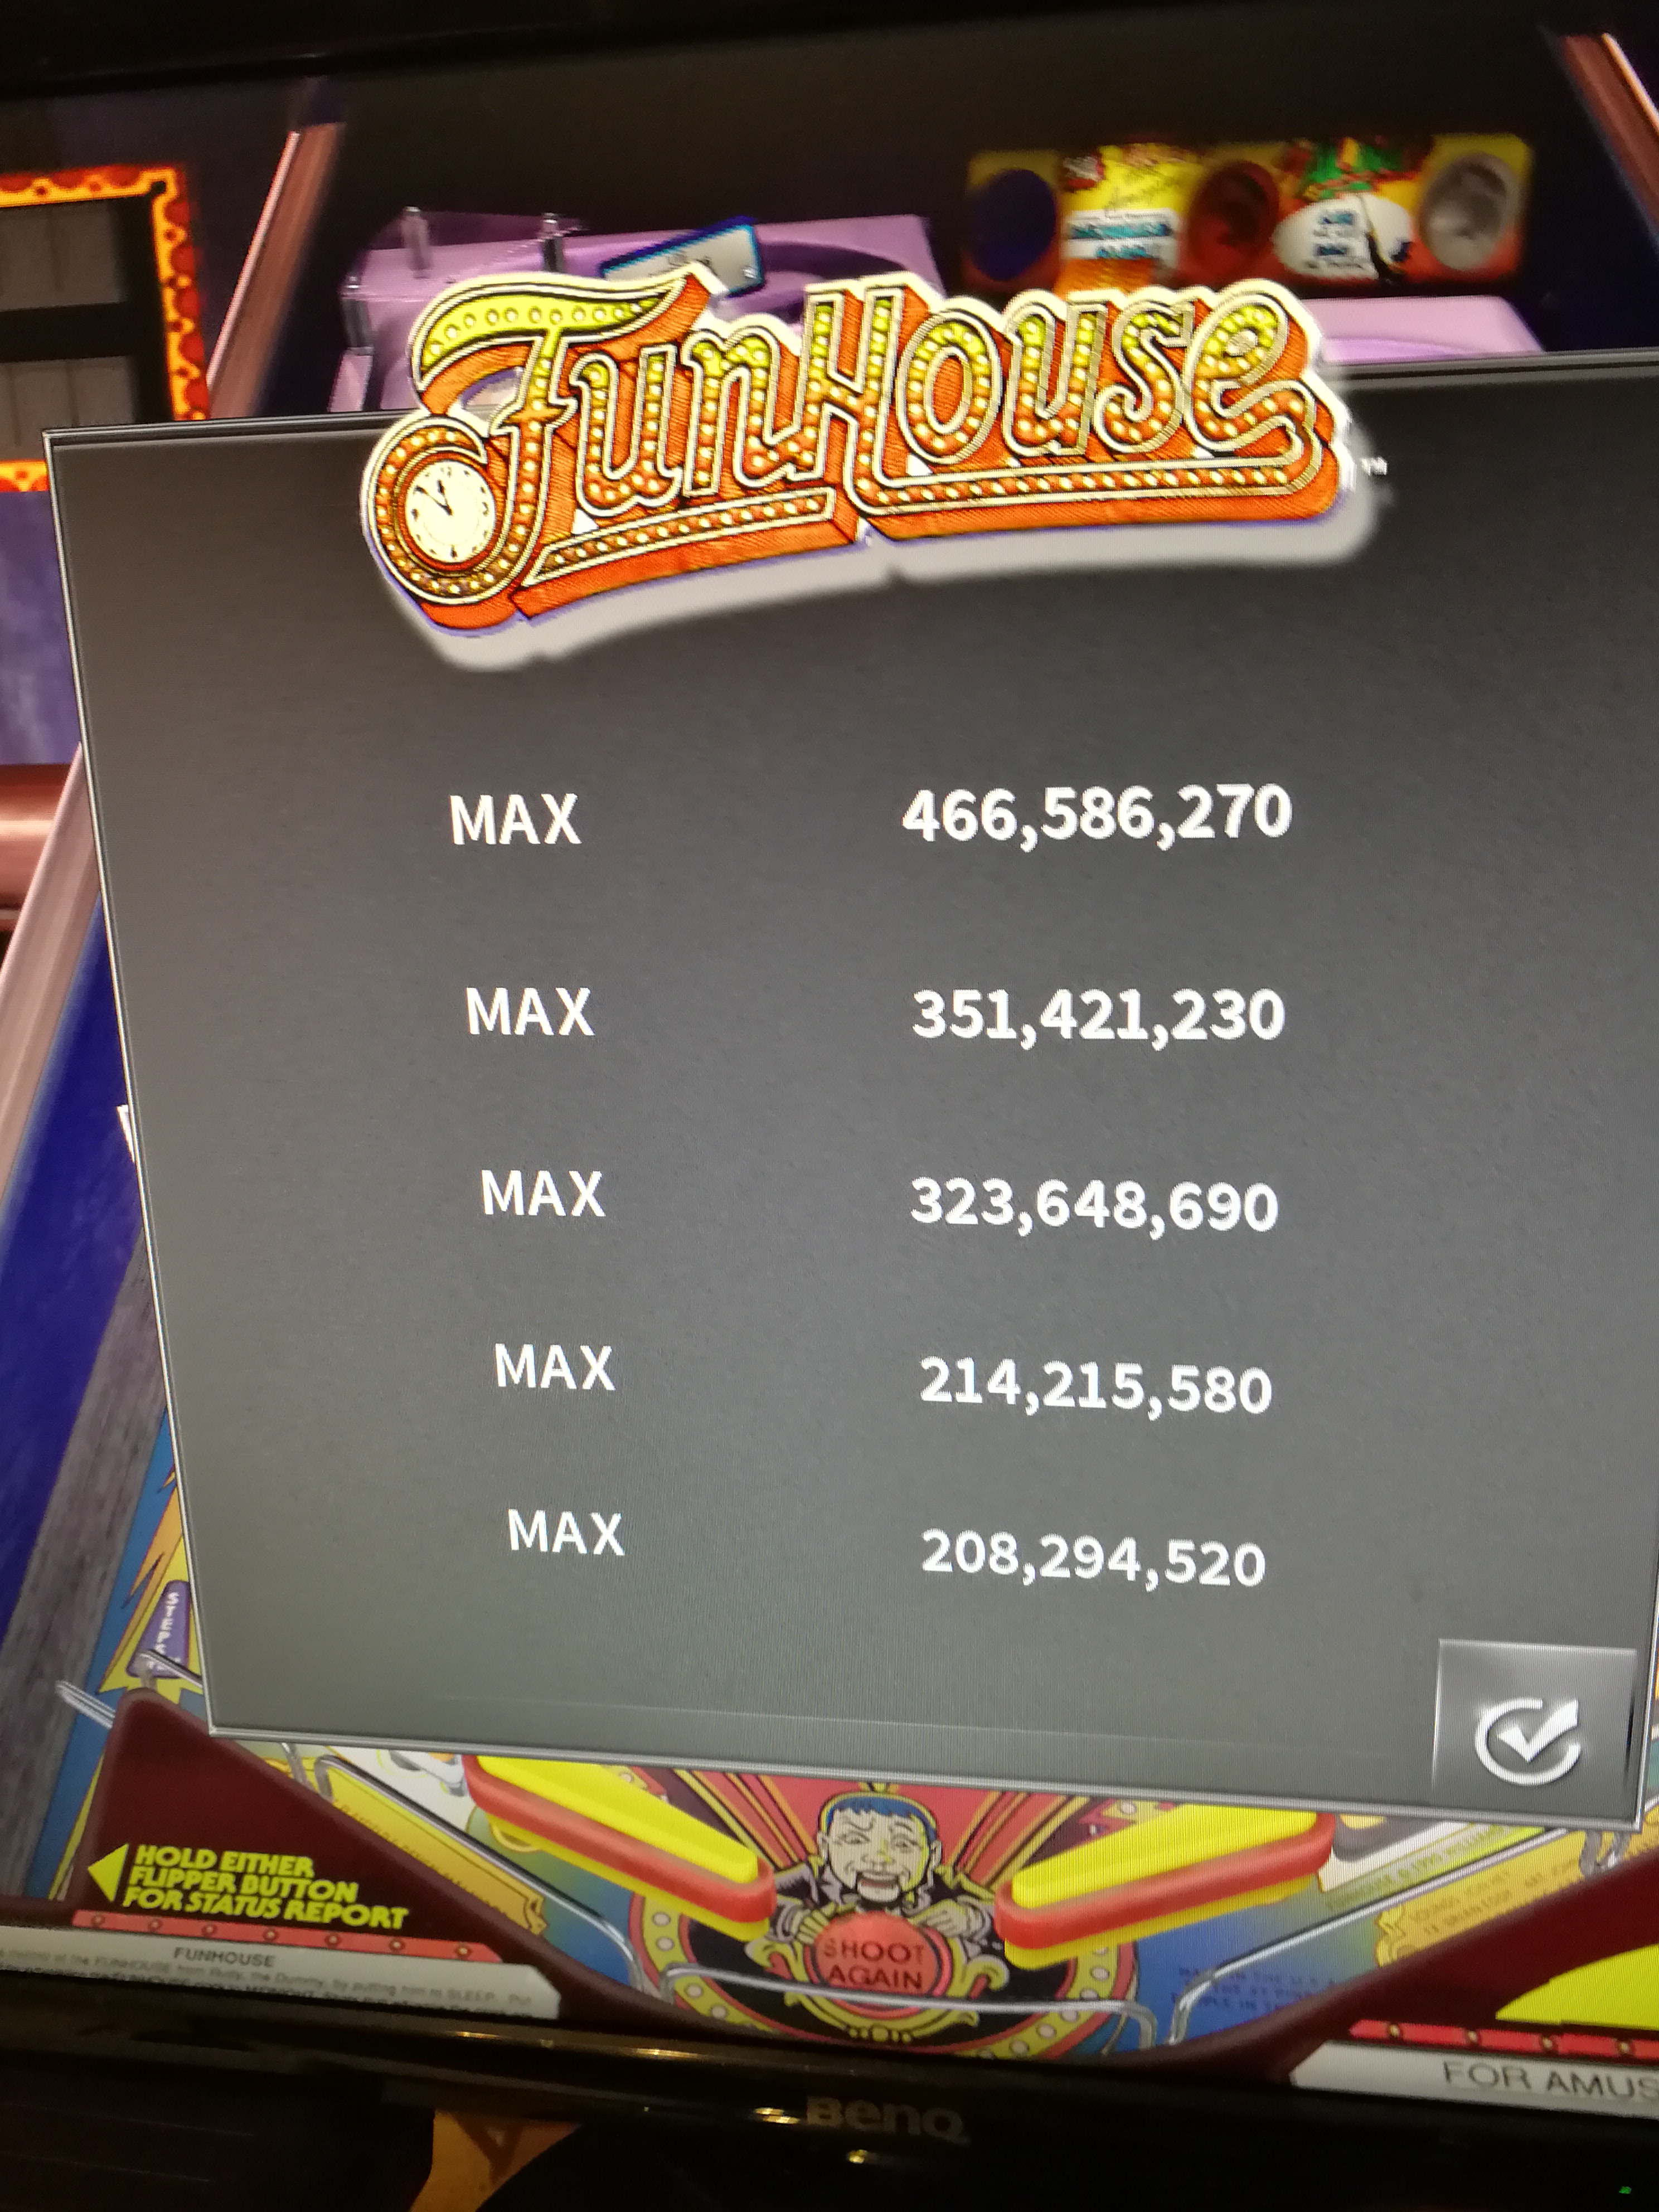 Maxwel: Pinball Arcade: Funhouse (PC) 466,586,270 points on 2017-01-20 03:46:44